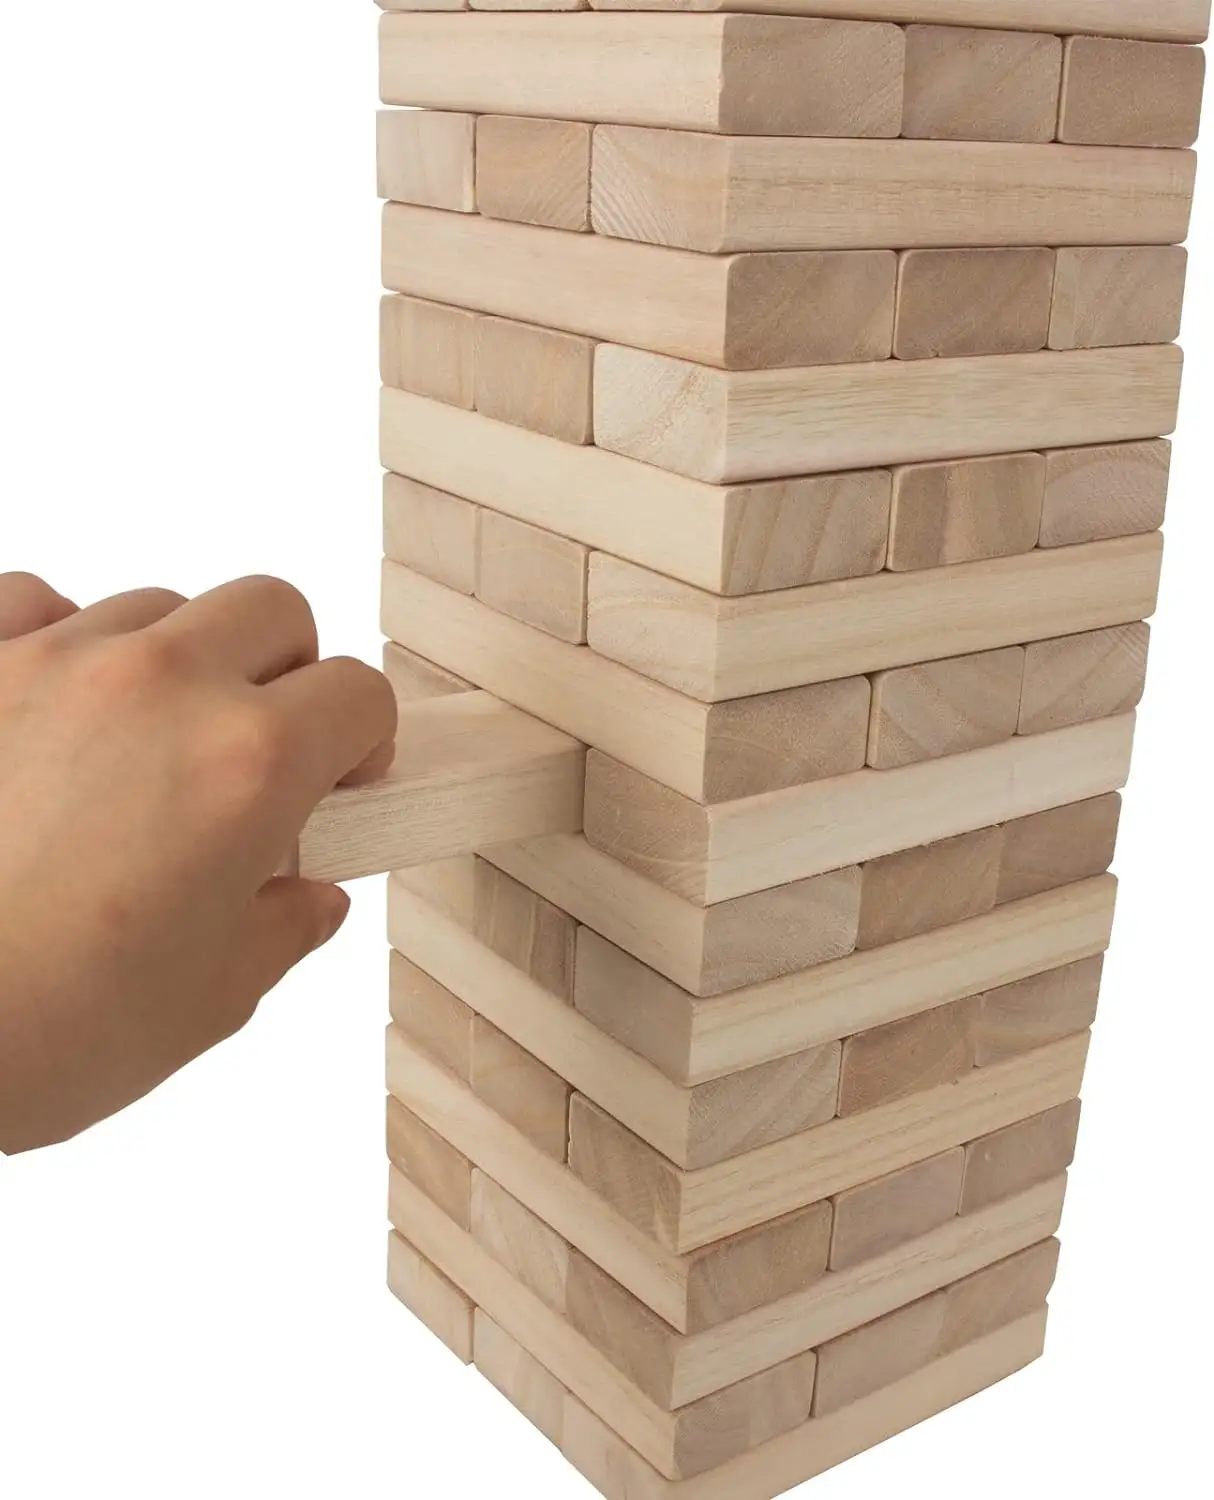 Torre de madera que cae juegos de beber para adultos bloques de apilamiento de madera Torre borracha maderas juguetes apilados